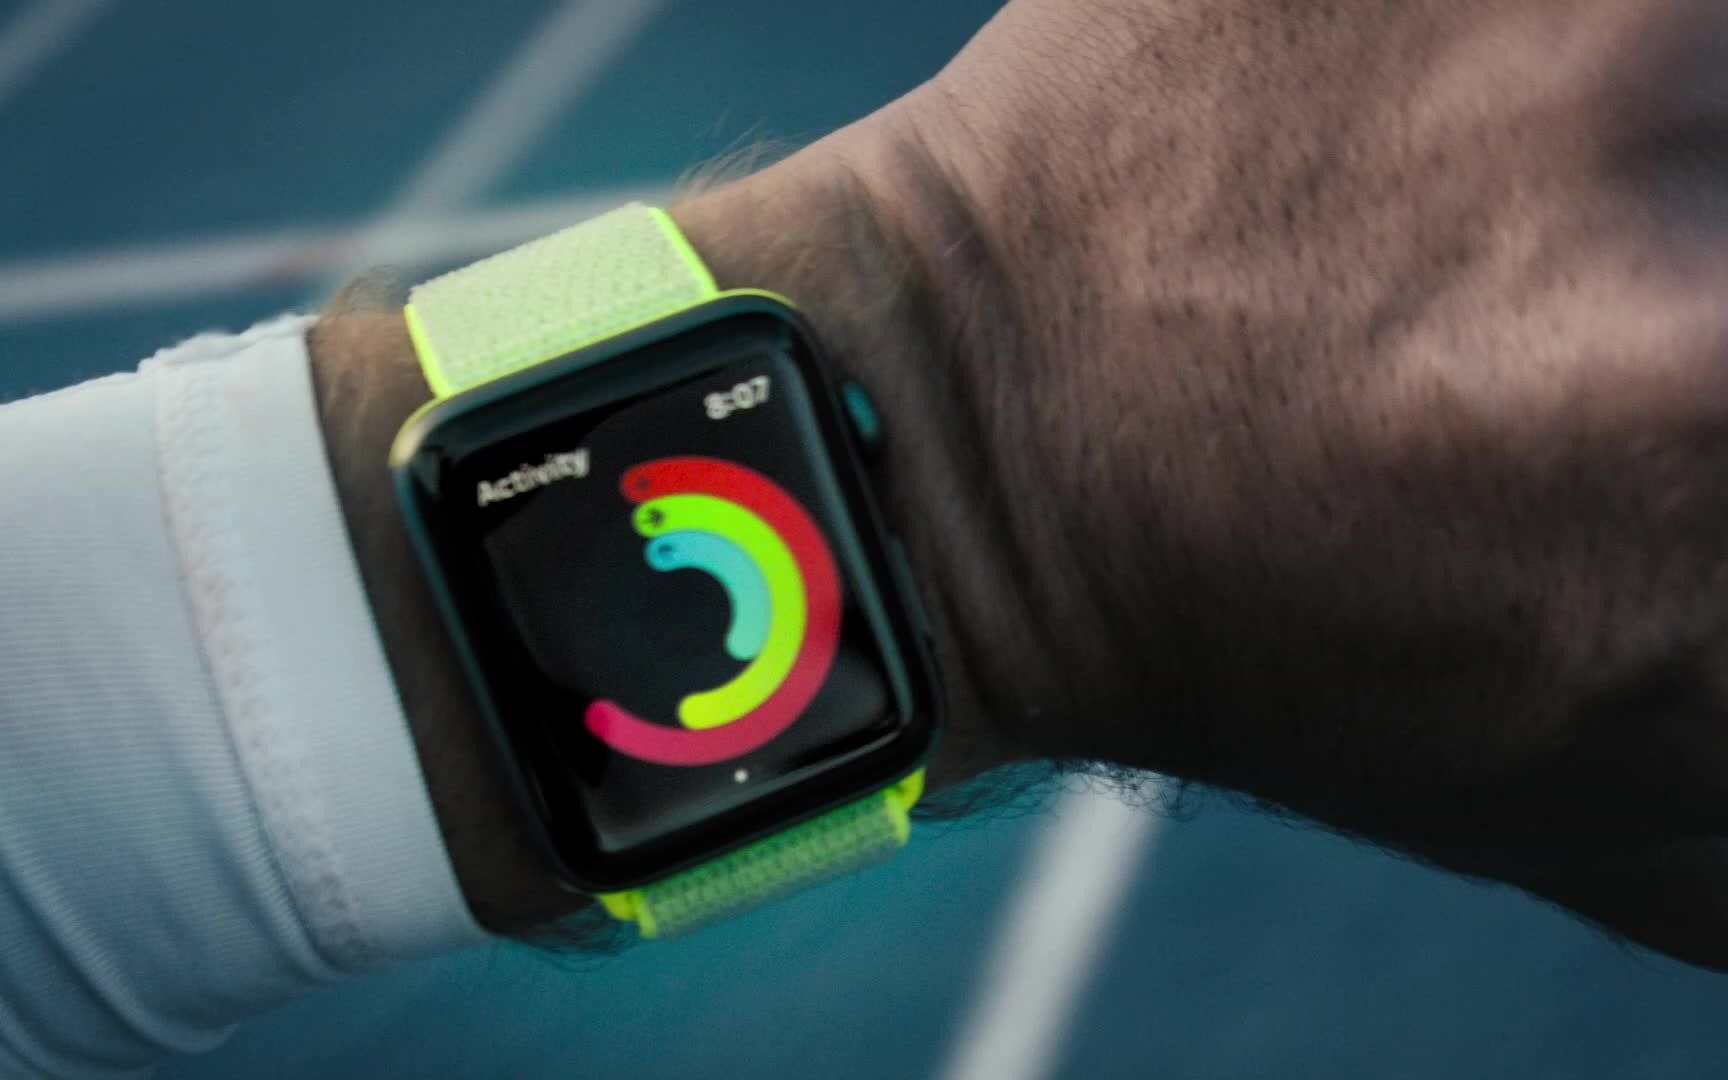 【 2018｜1080P 】Apple Watch Series 3 - 动起来，圆环满起来。